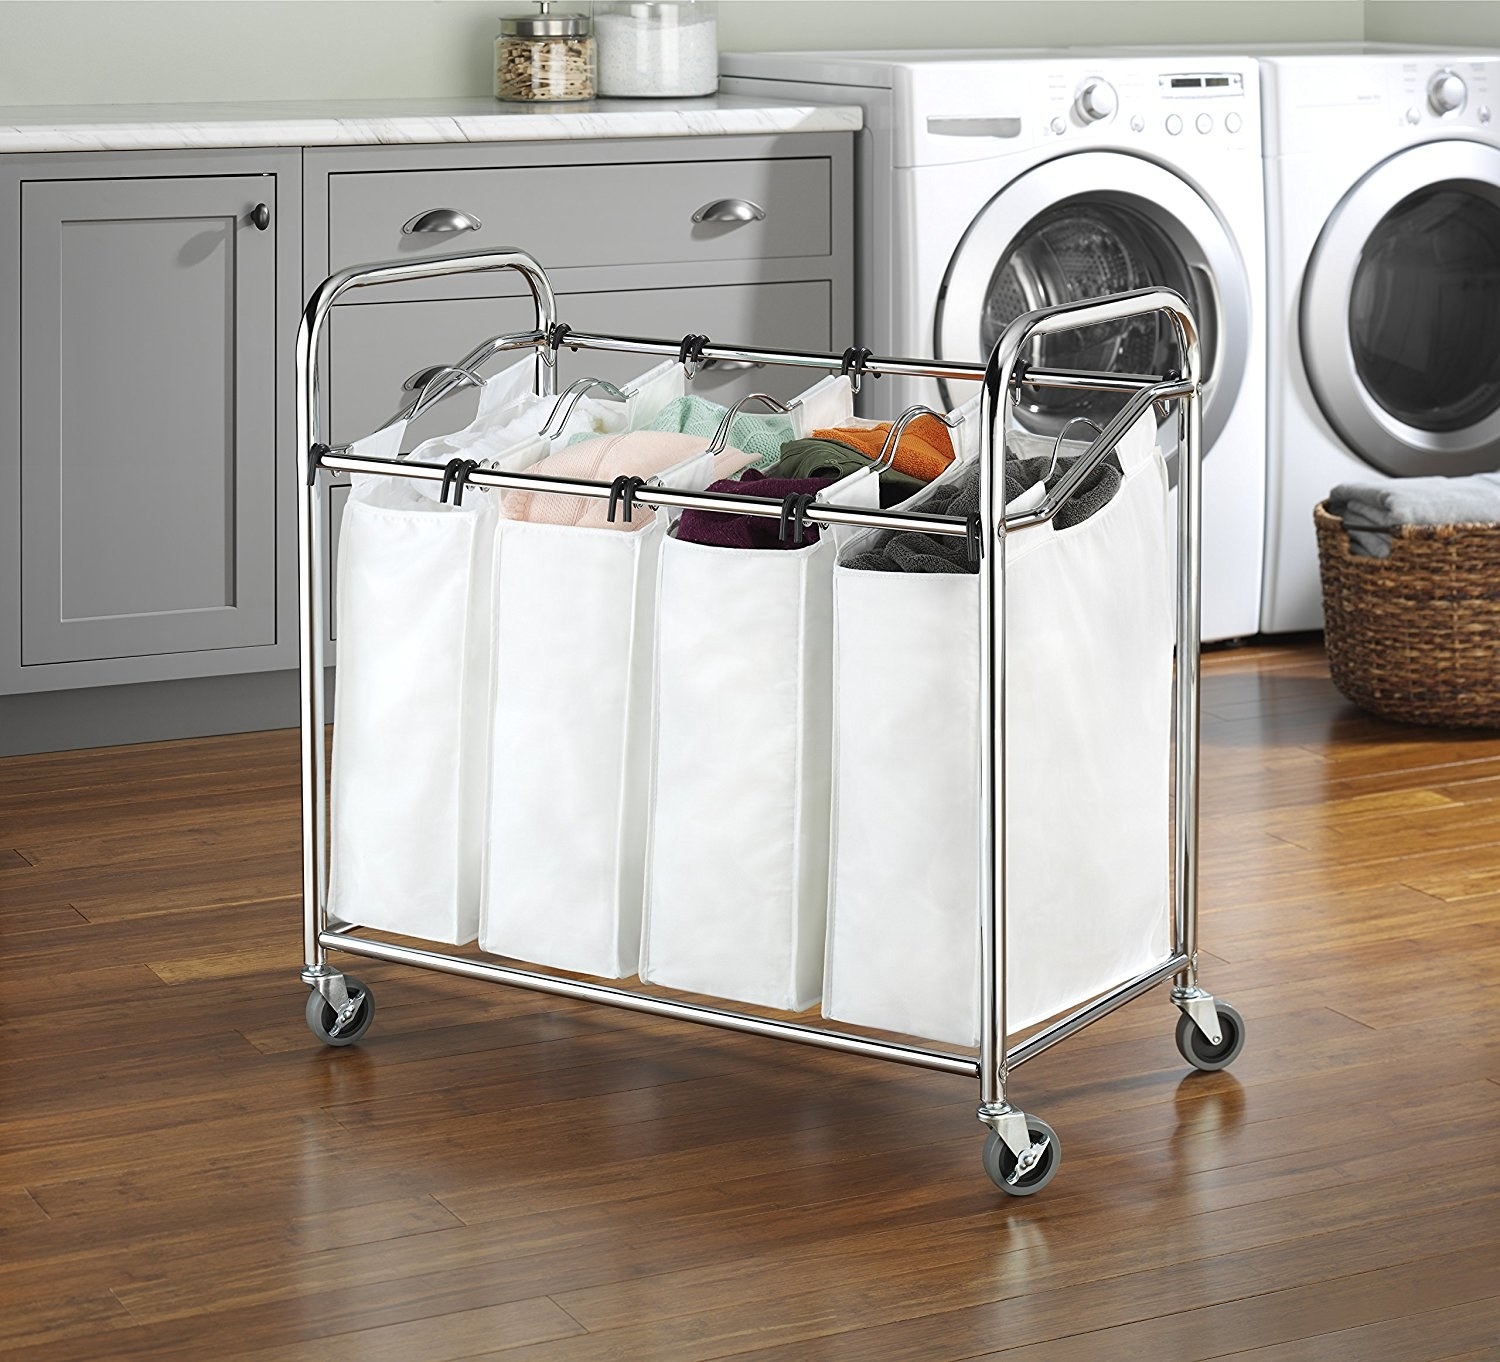  GOGOODA 4 Pcs Mesh Laundry Bag for Bras Lingerie Wash Bag for  Delicates, Large, 4 Pack : Home & Kitchen